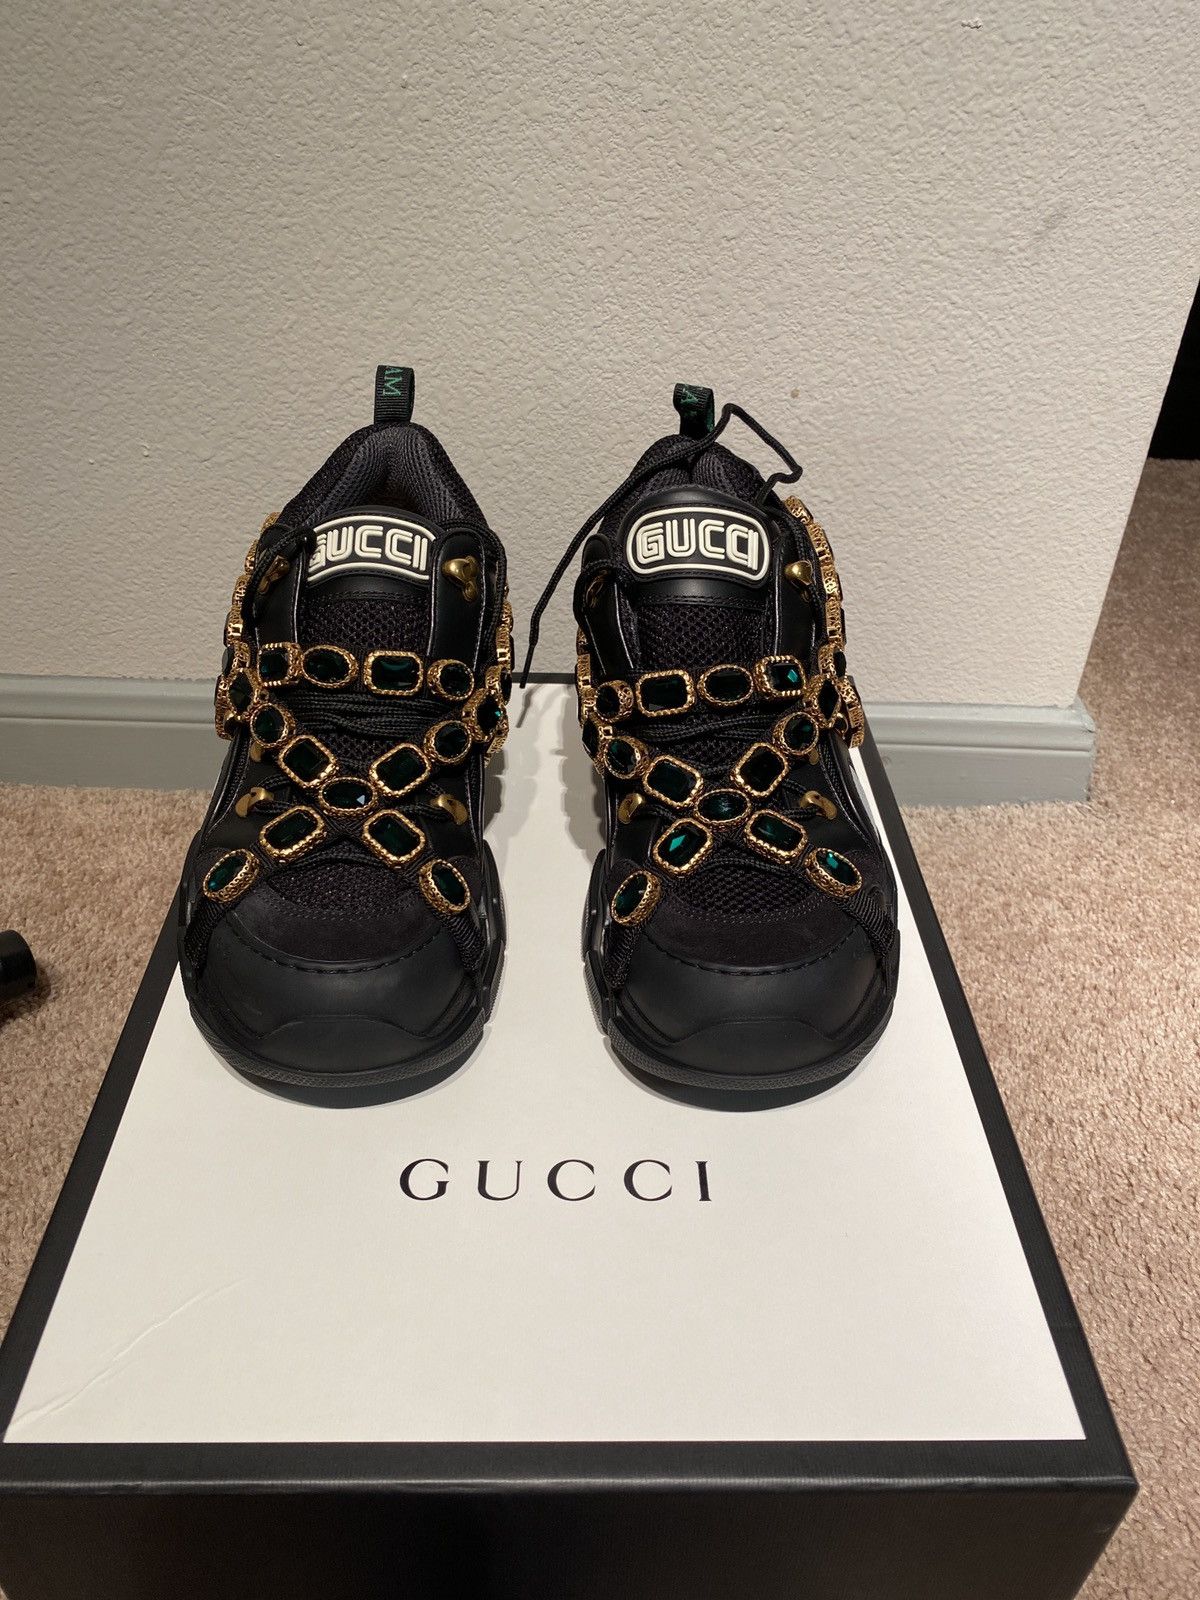 Gucci Gucci Flash Trek Sneakers Size US 9.5 / EU 42-43 - 1 Preview